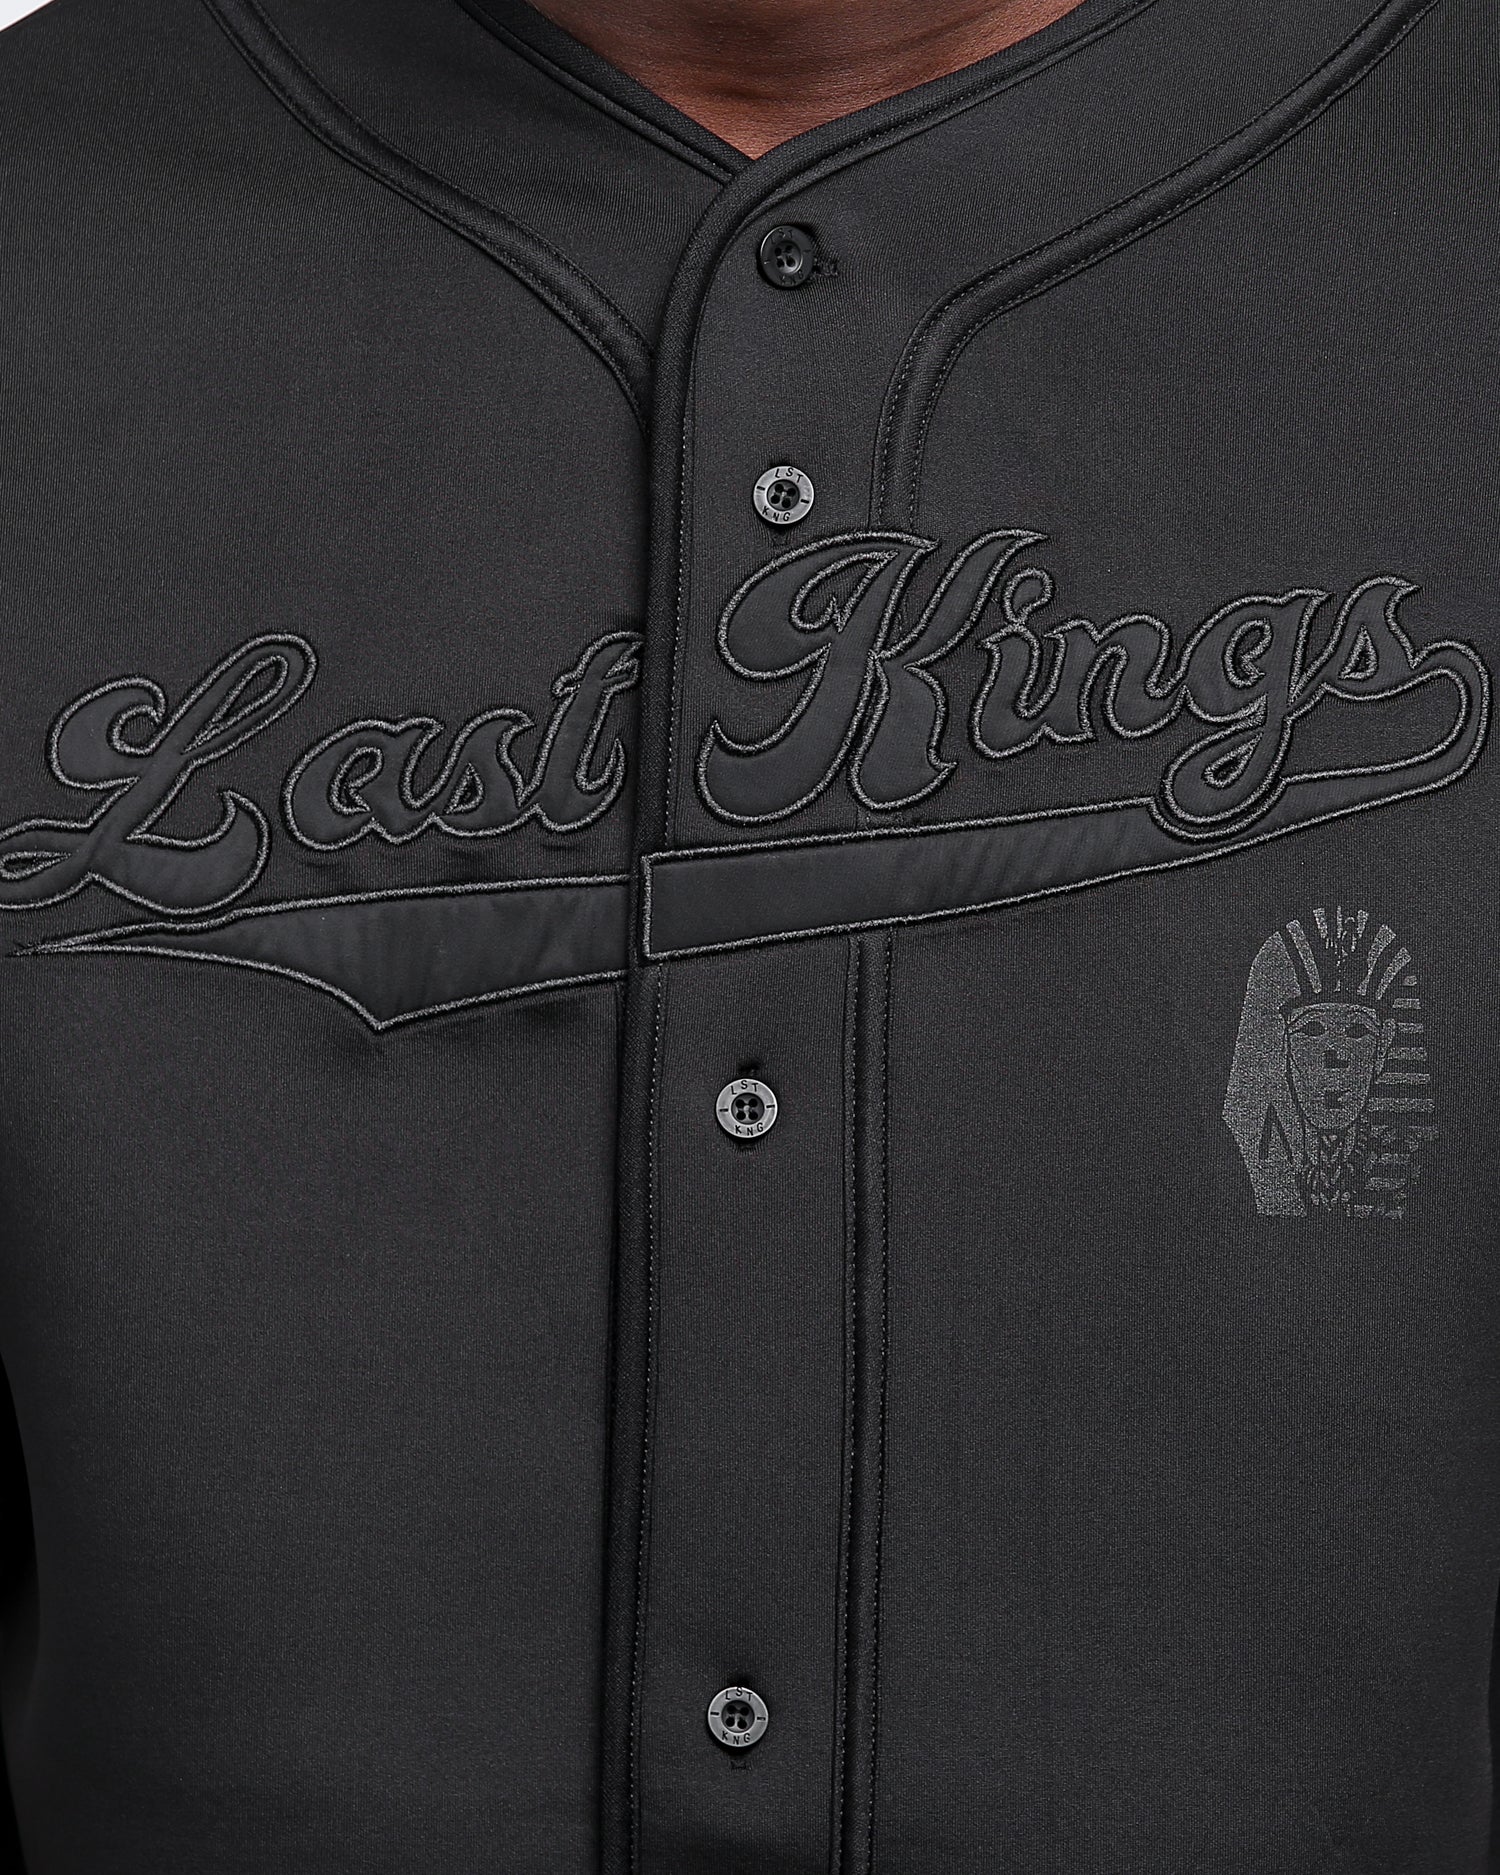 last kings baseball jersey